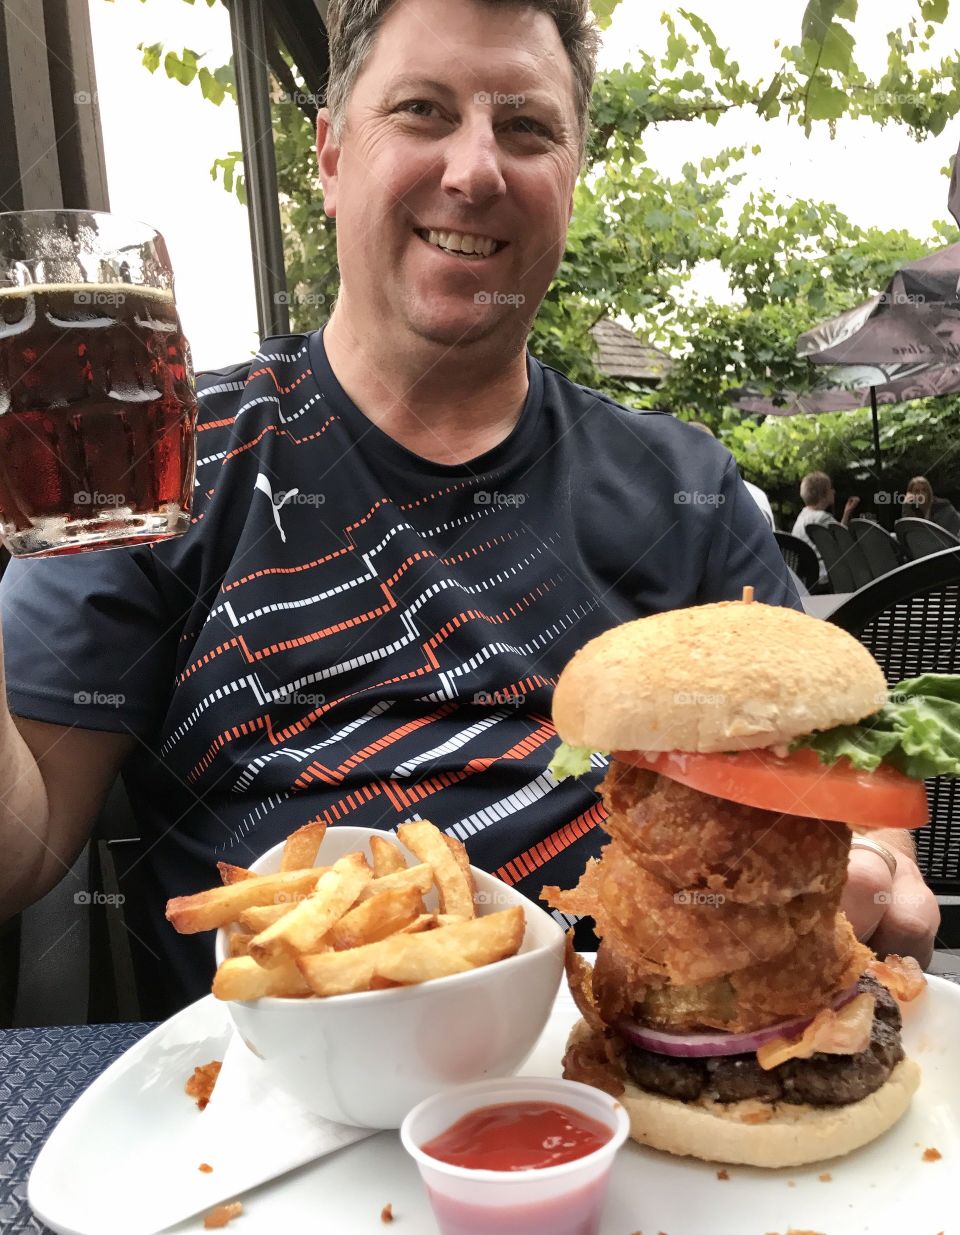 Man eats huge burger, fries and beer